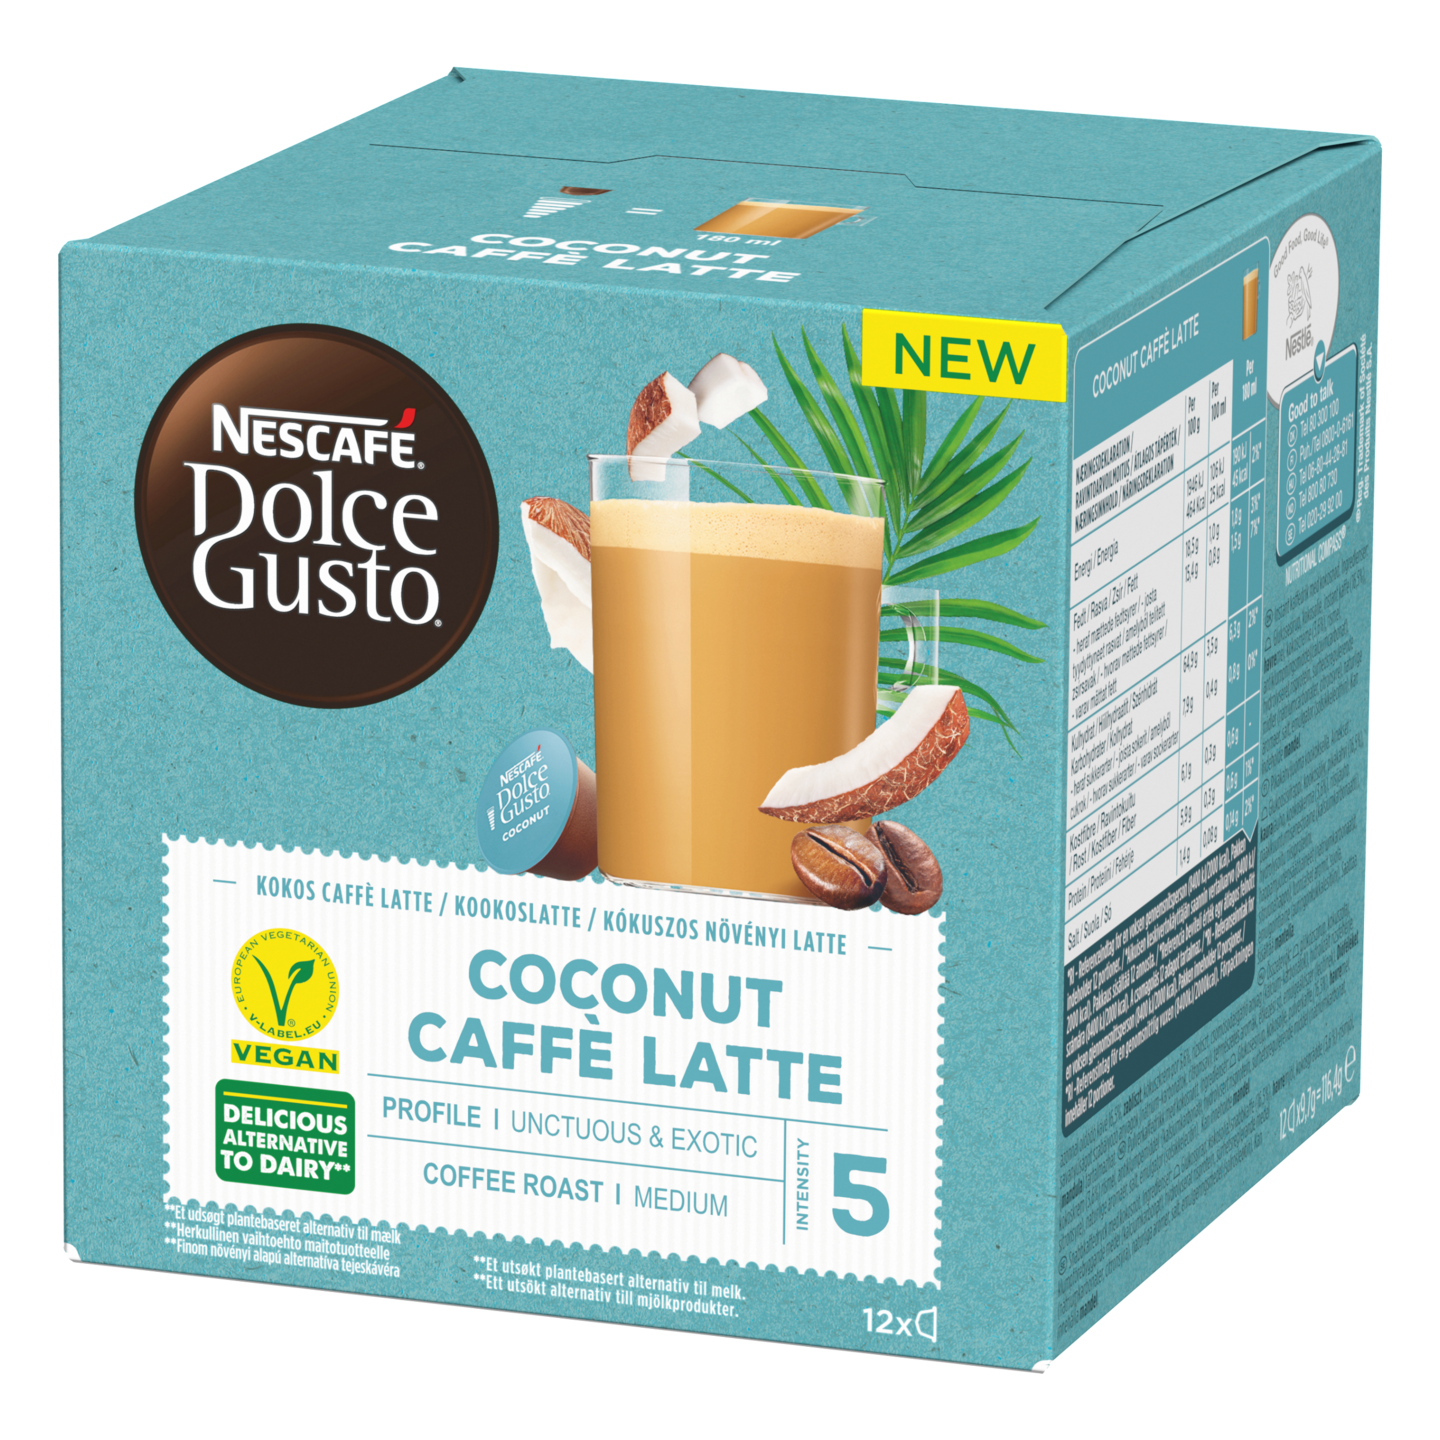 Nescafe Dolce Gusto Coconut Caffe Latte kahvikapseli 12 kpl